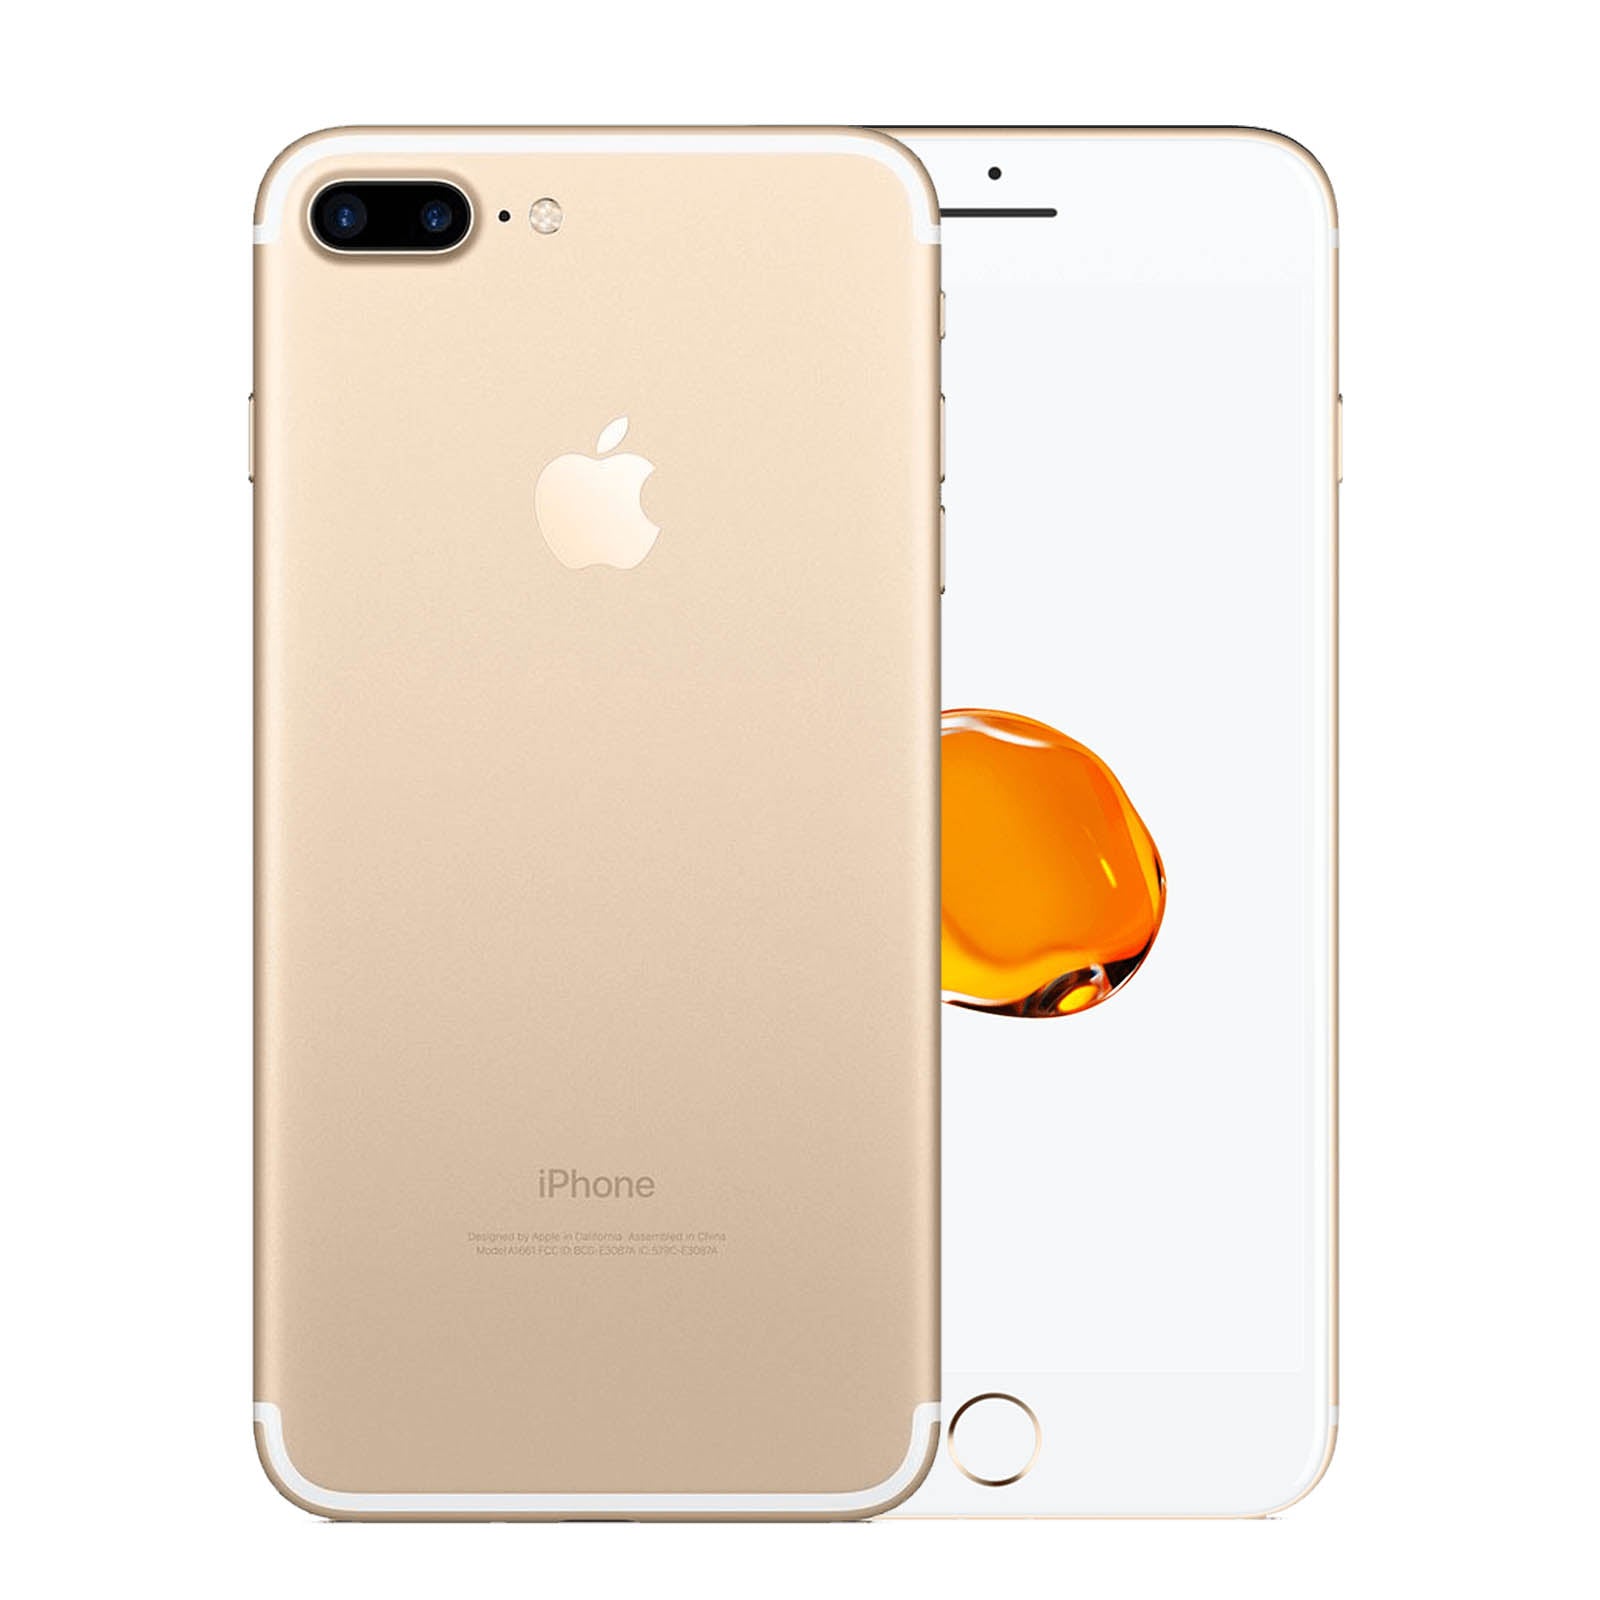 Apple iPhone 7 Plus 32GB Gold Fair - Unlocked